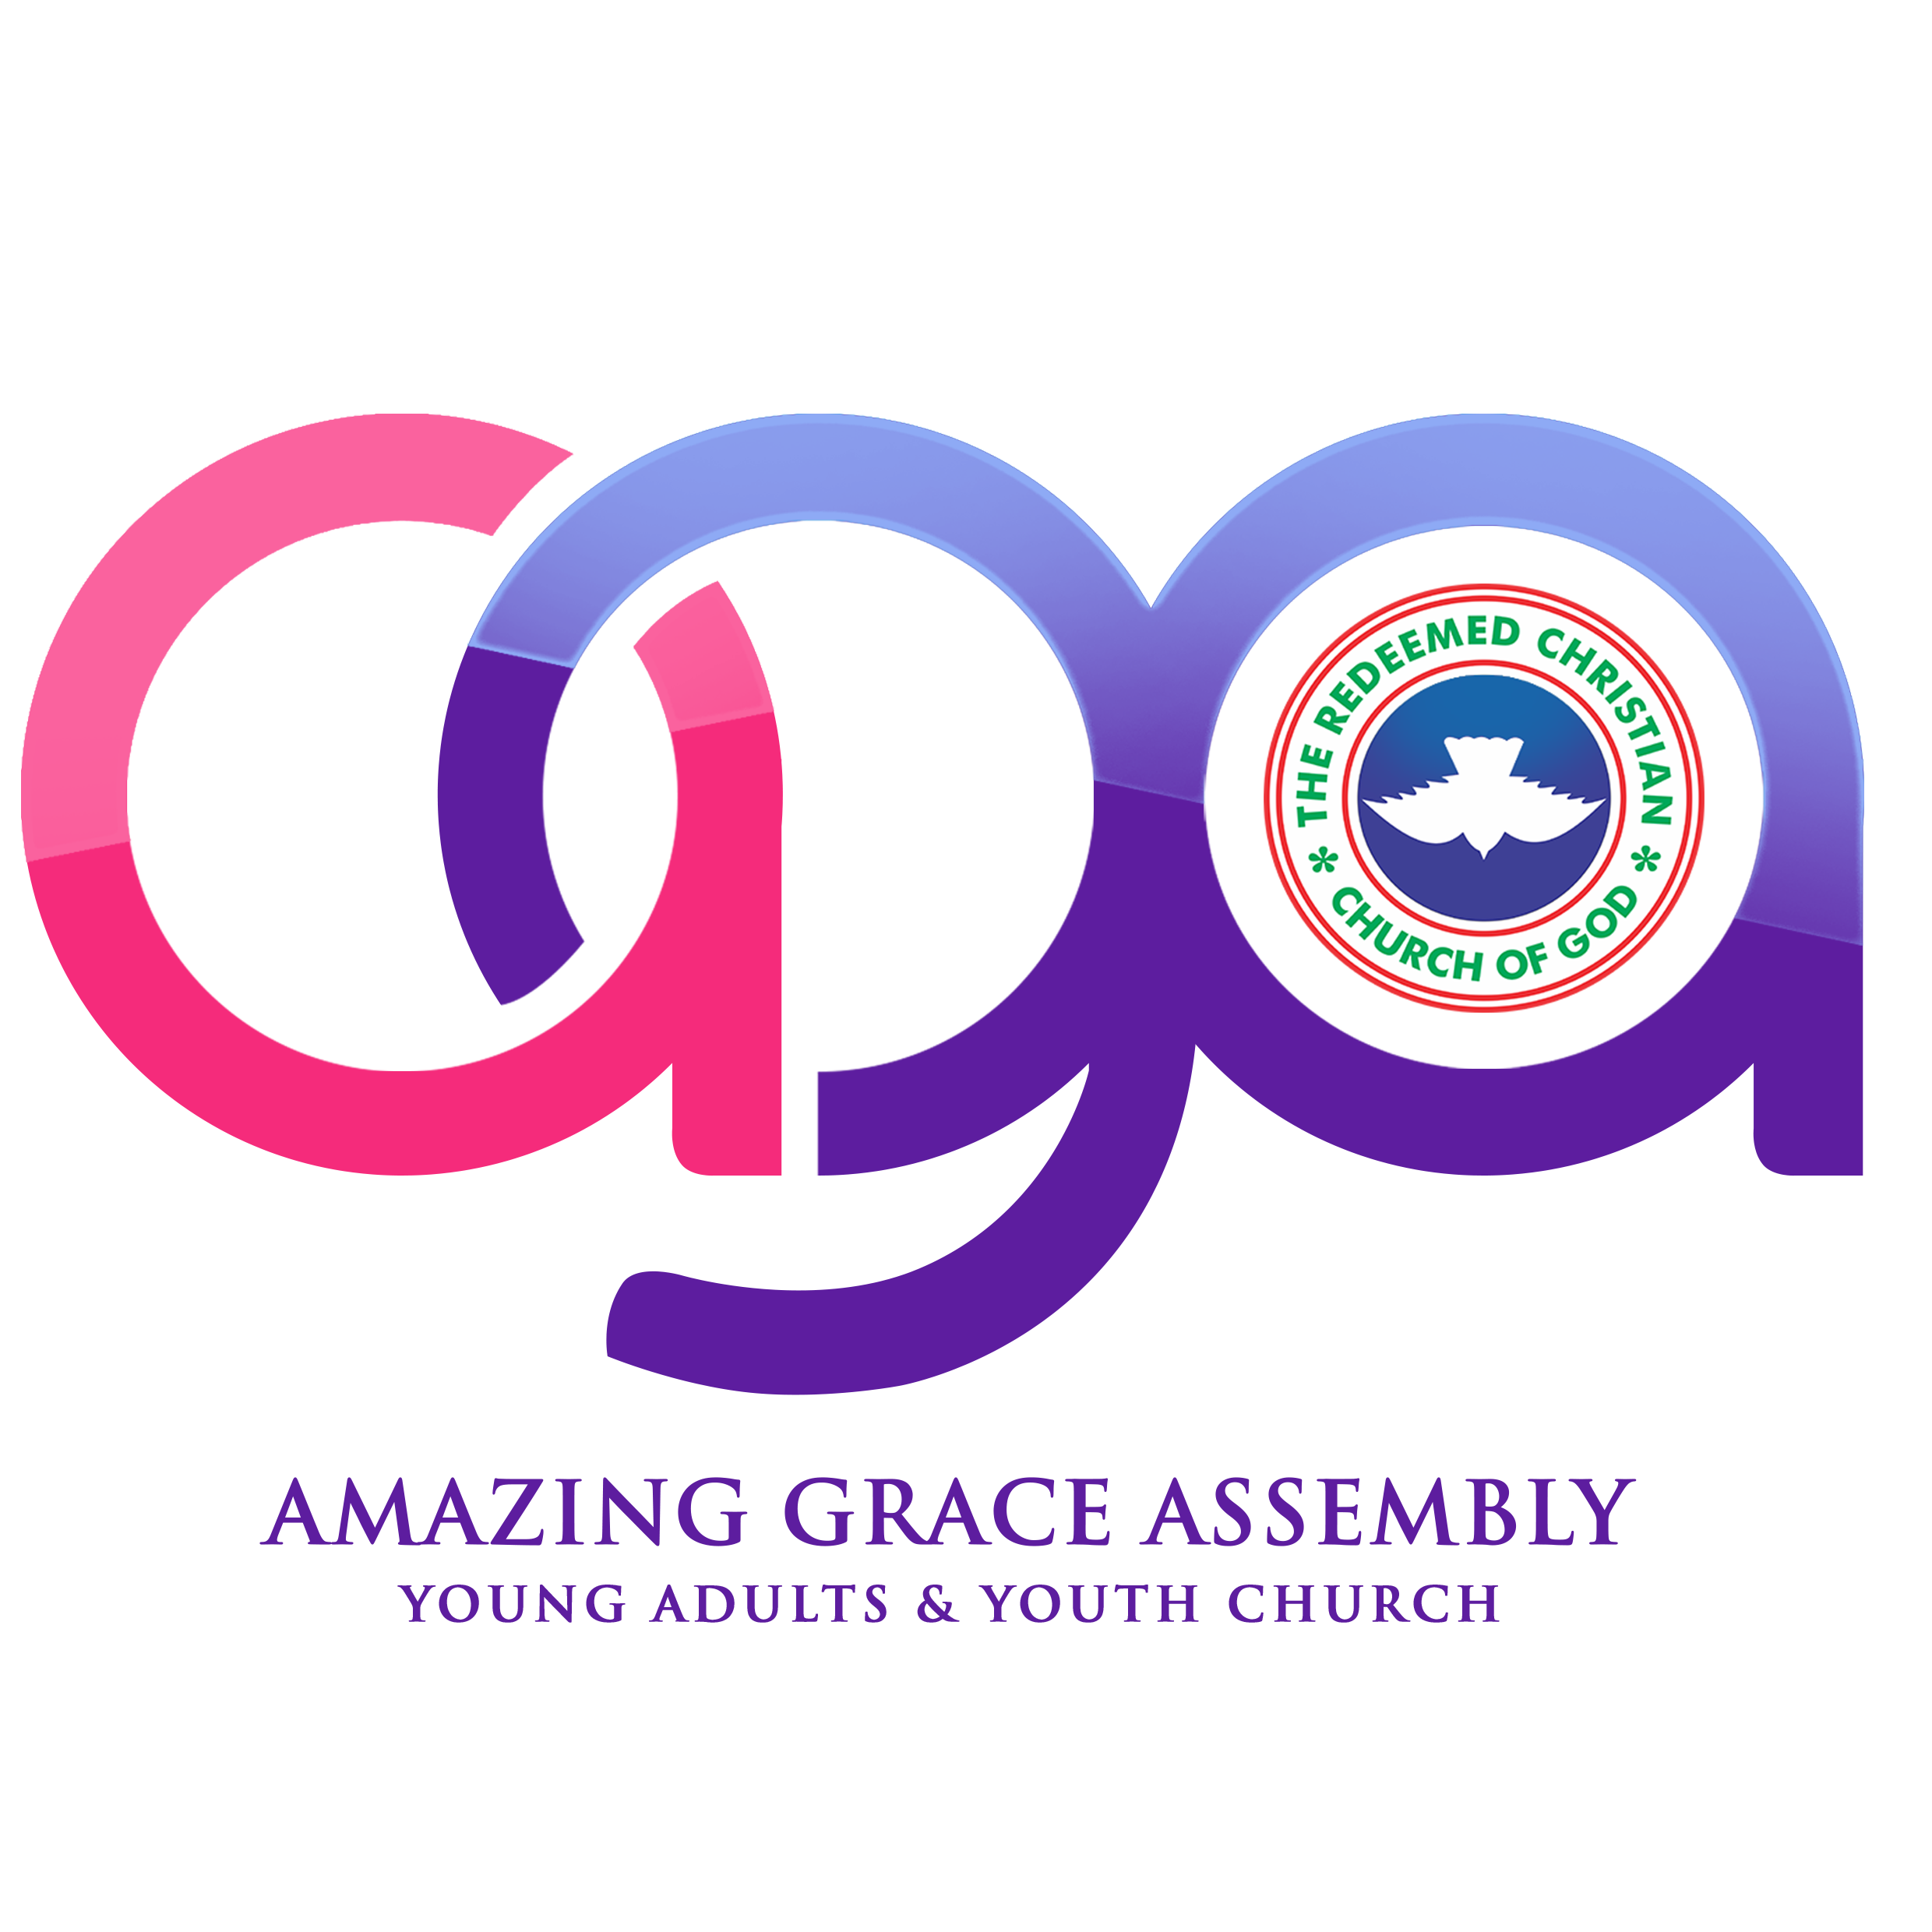 RCCG Amazing Grace Assembly